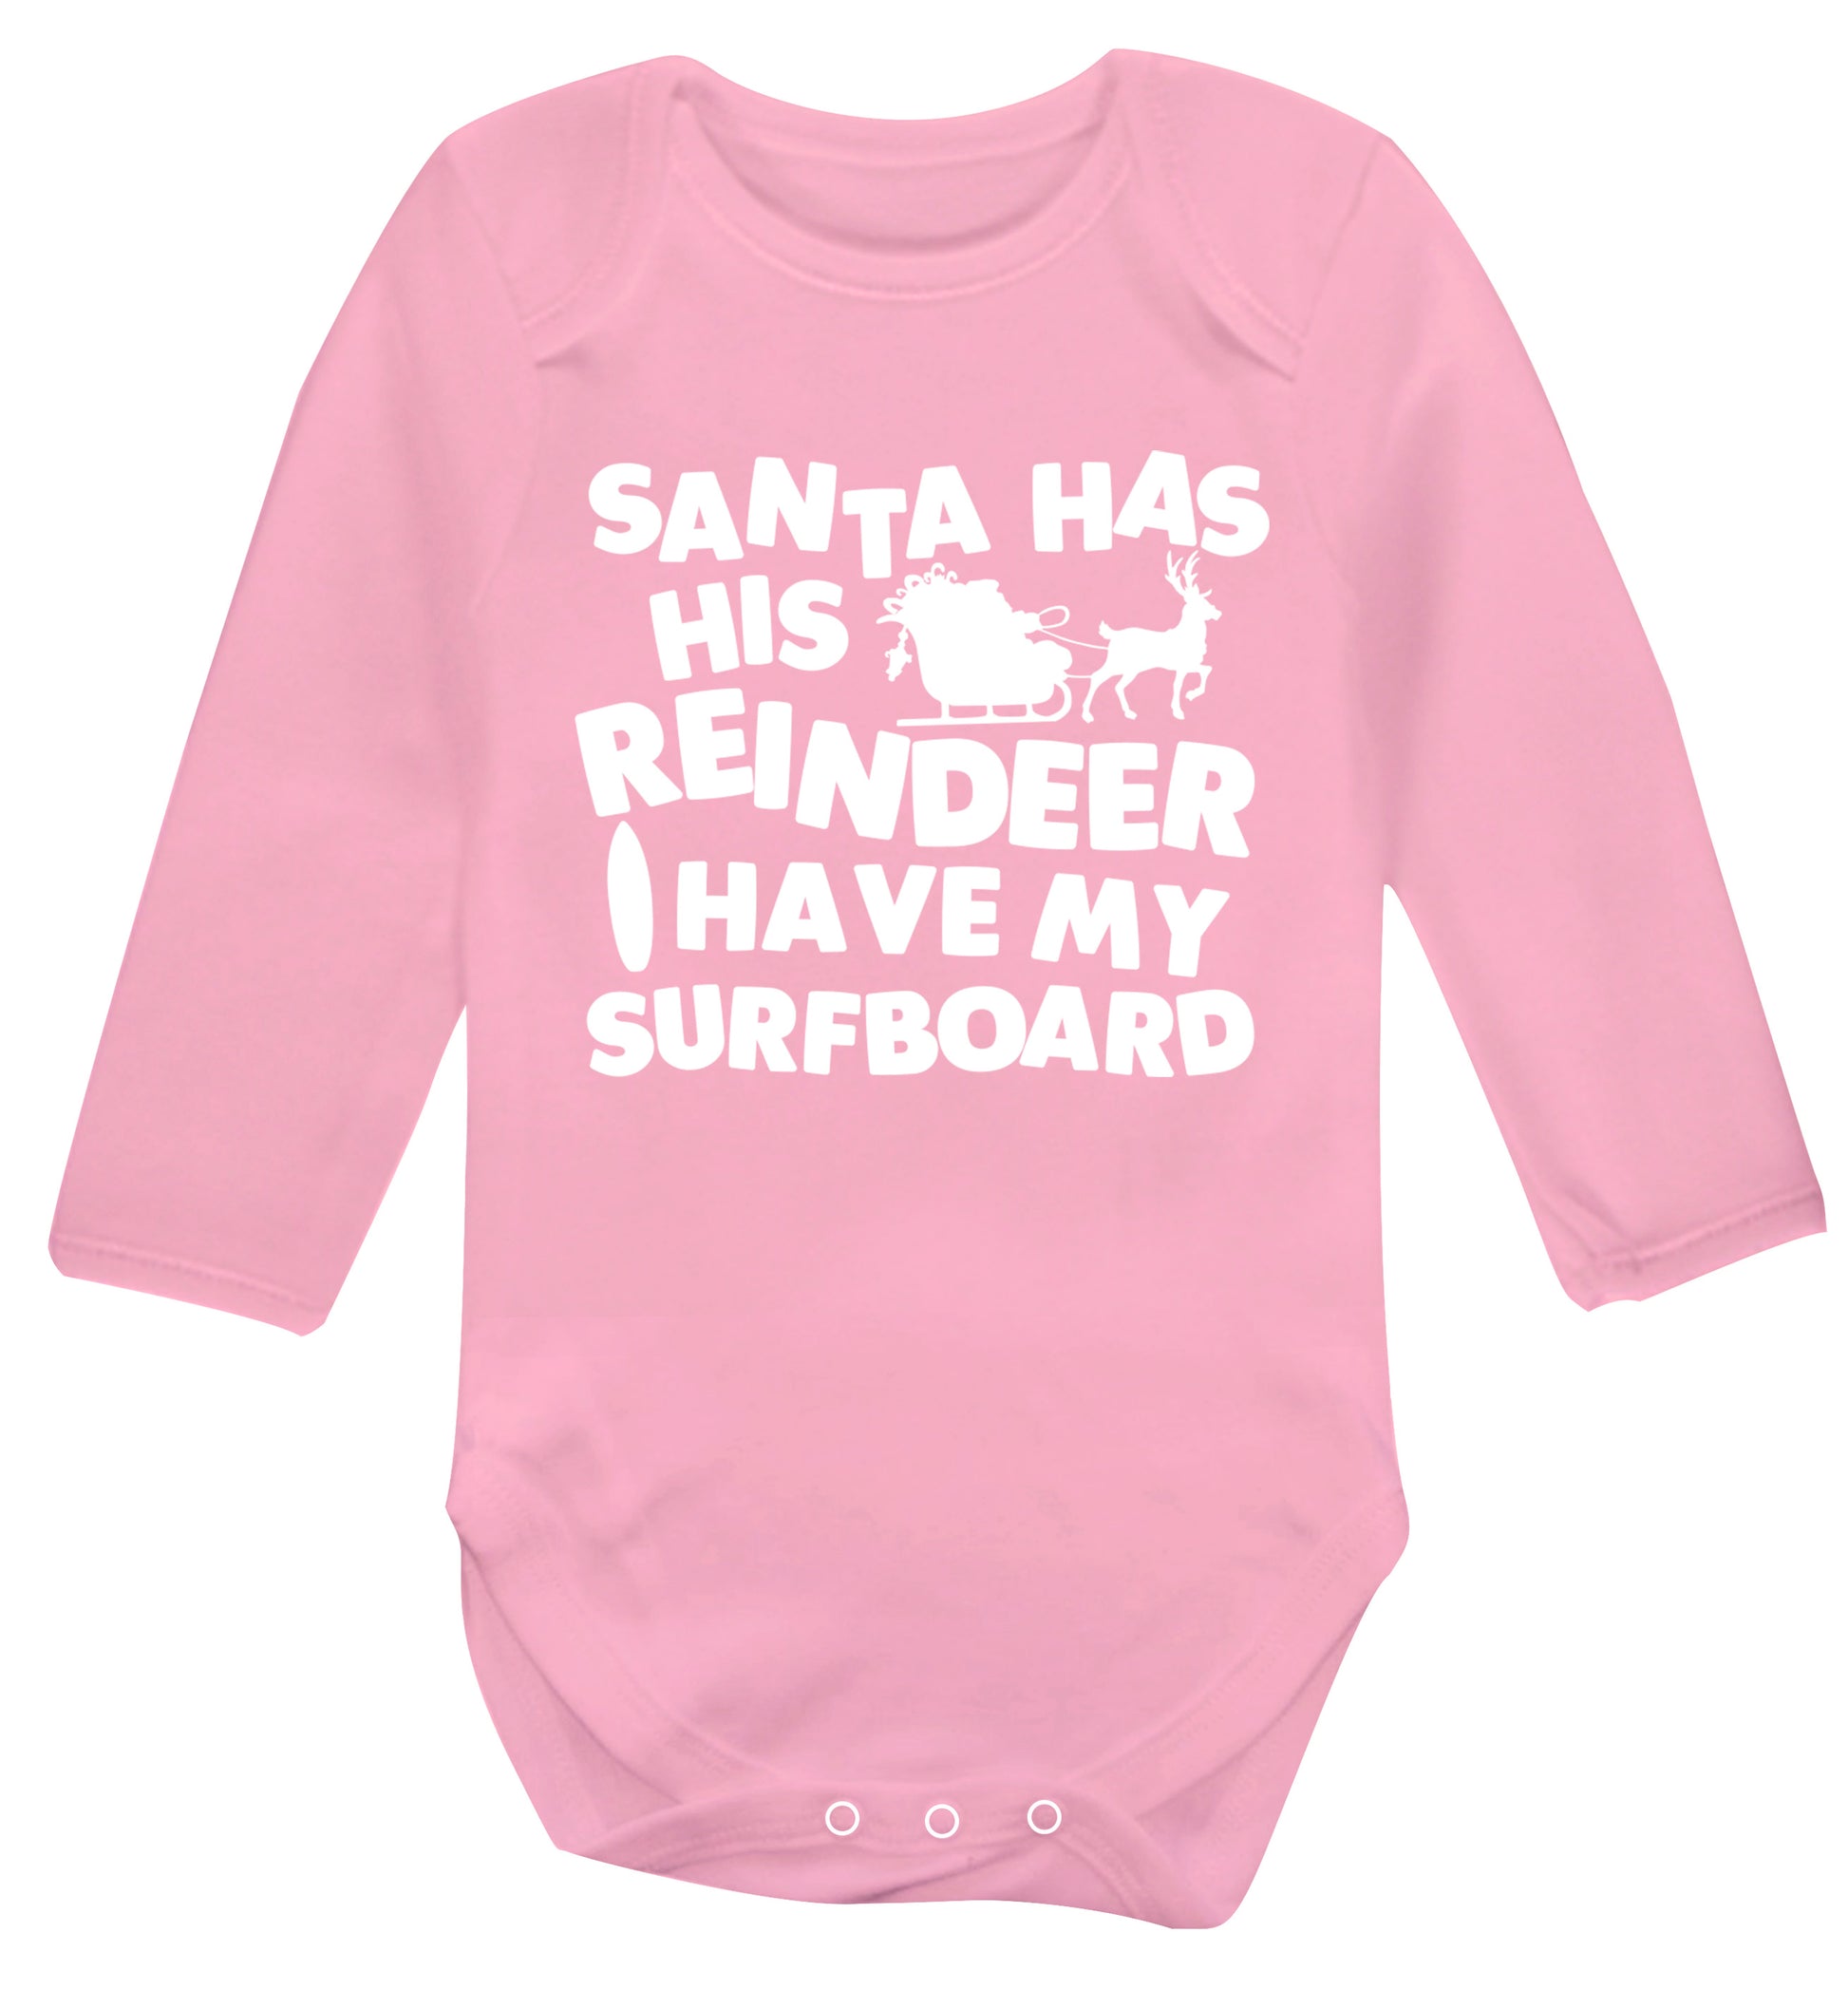 Santa has his reindeer I have my surfboard Baby Vest long sleeved pale pink 6-12 months